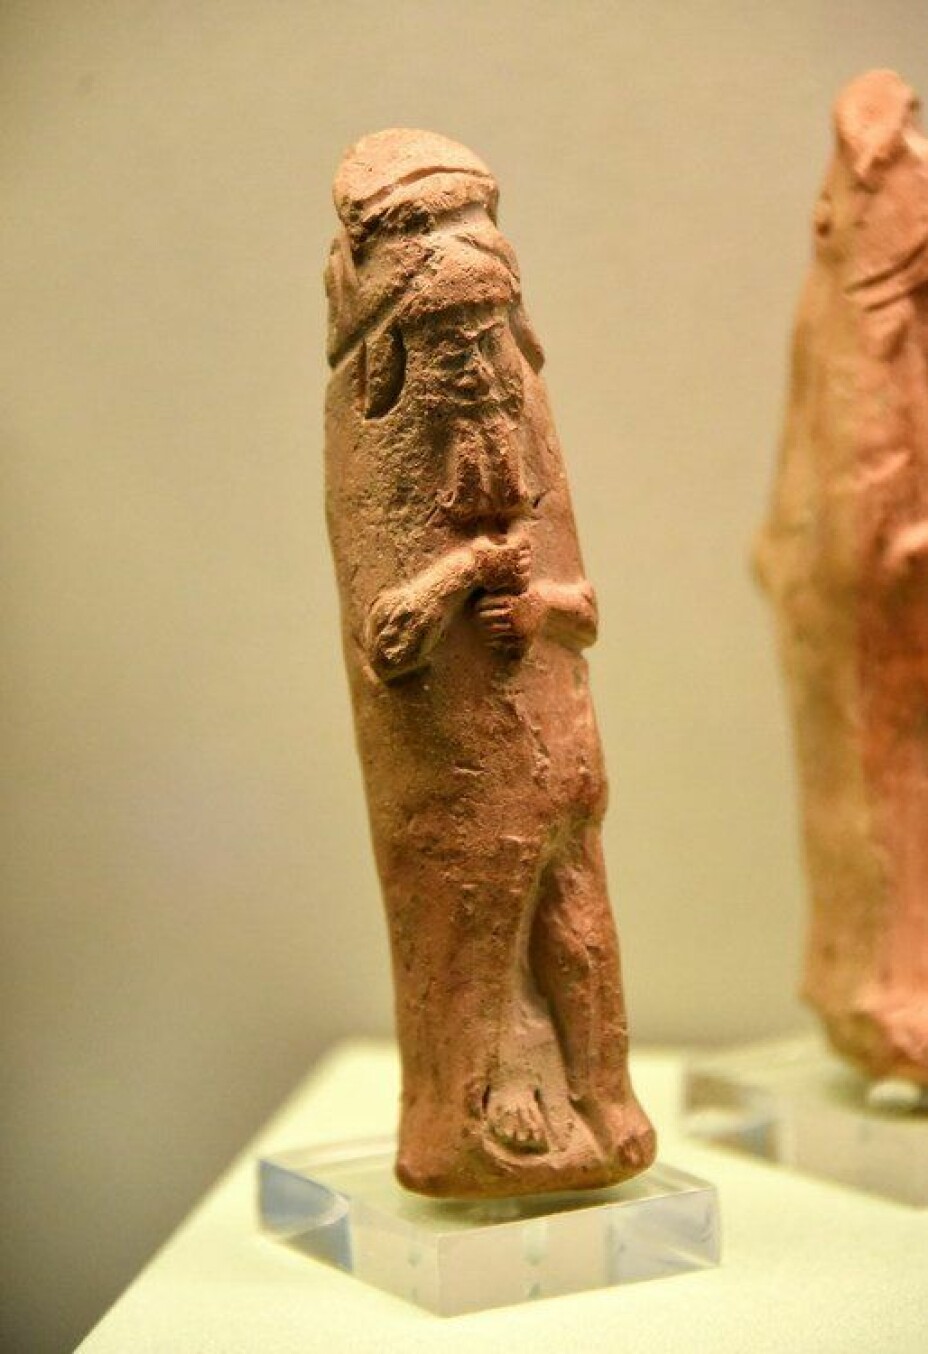 Figurine of a mythological sage wearing a fish cloak.